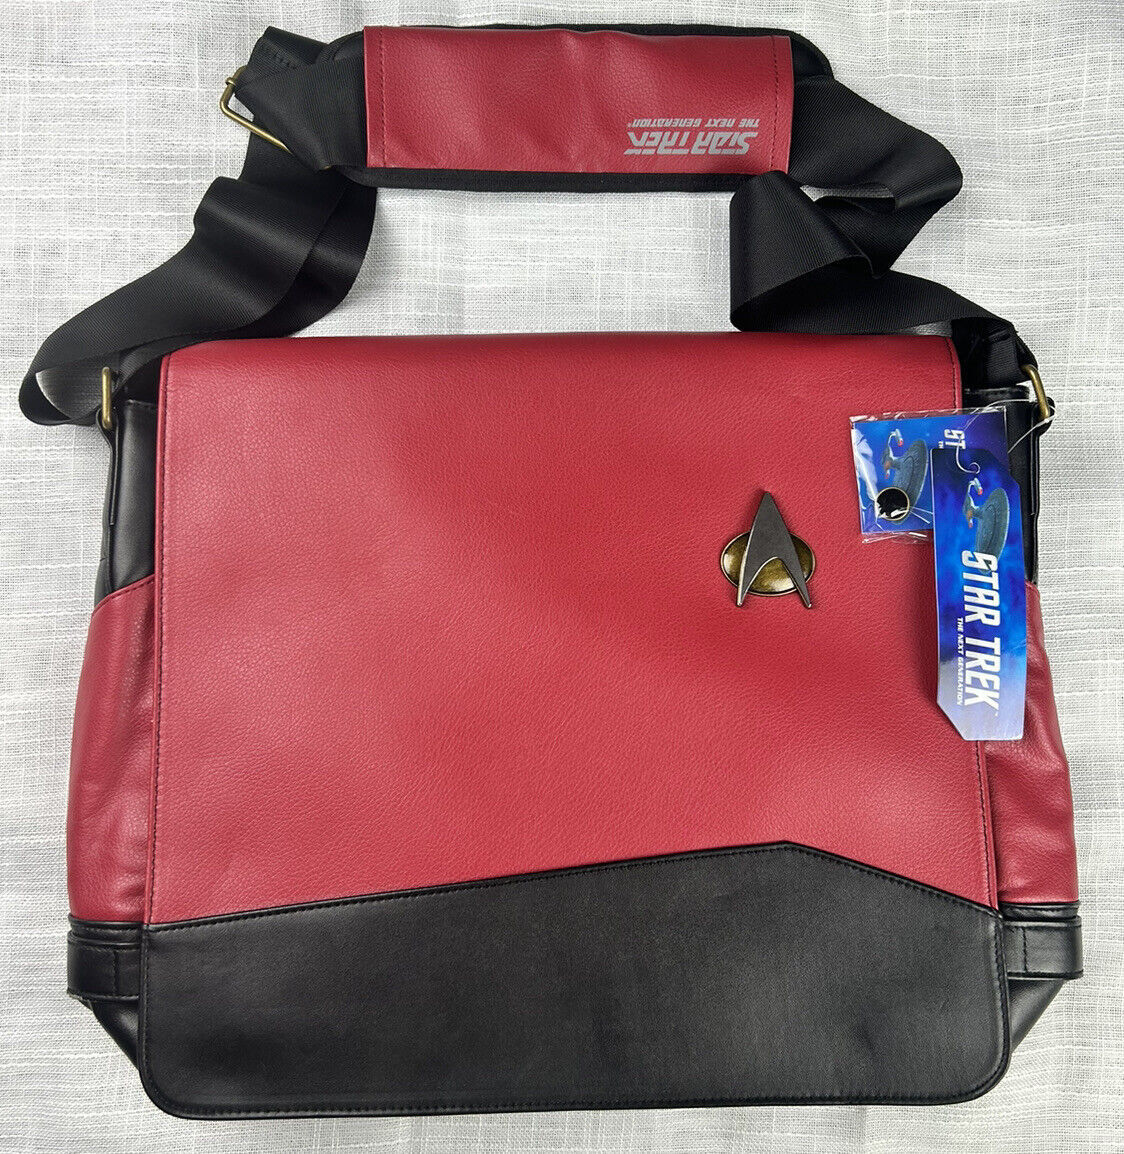 NEW/NWT (FLAW) Star Trek Next Generation Uniform Laptop/Messenger Bag Red/Black